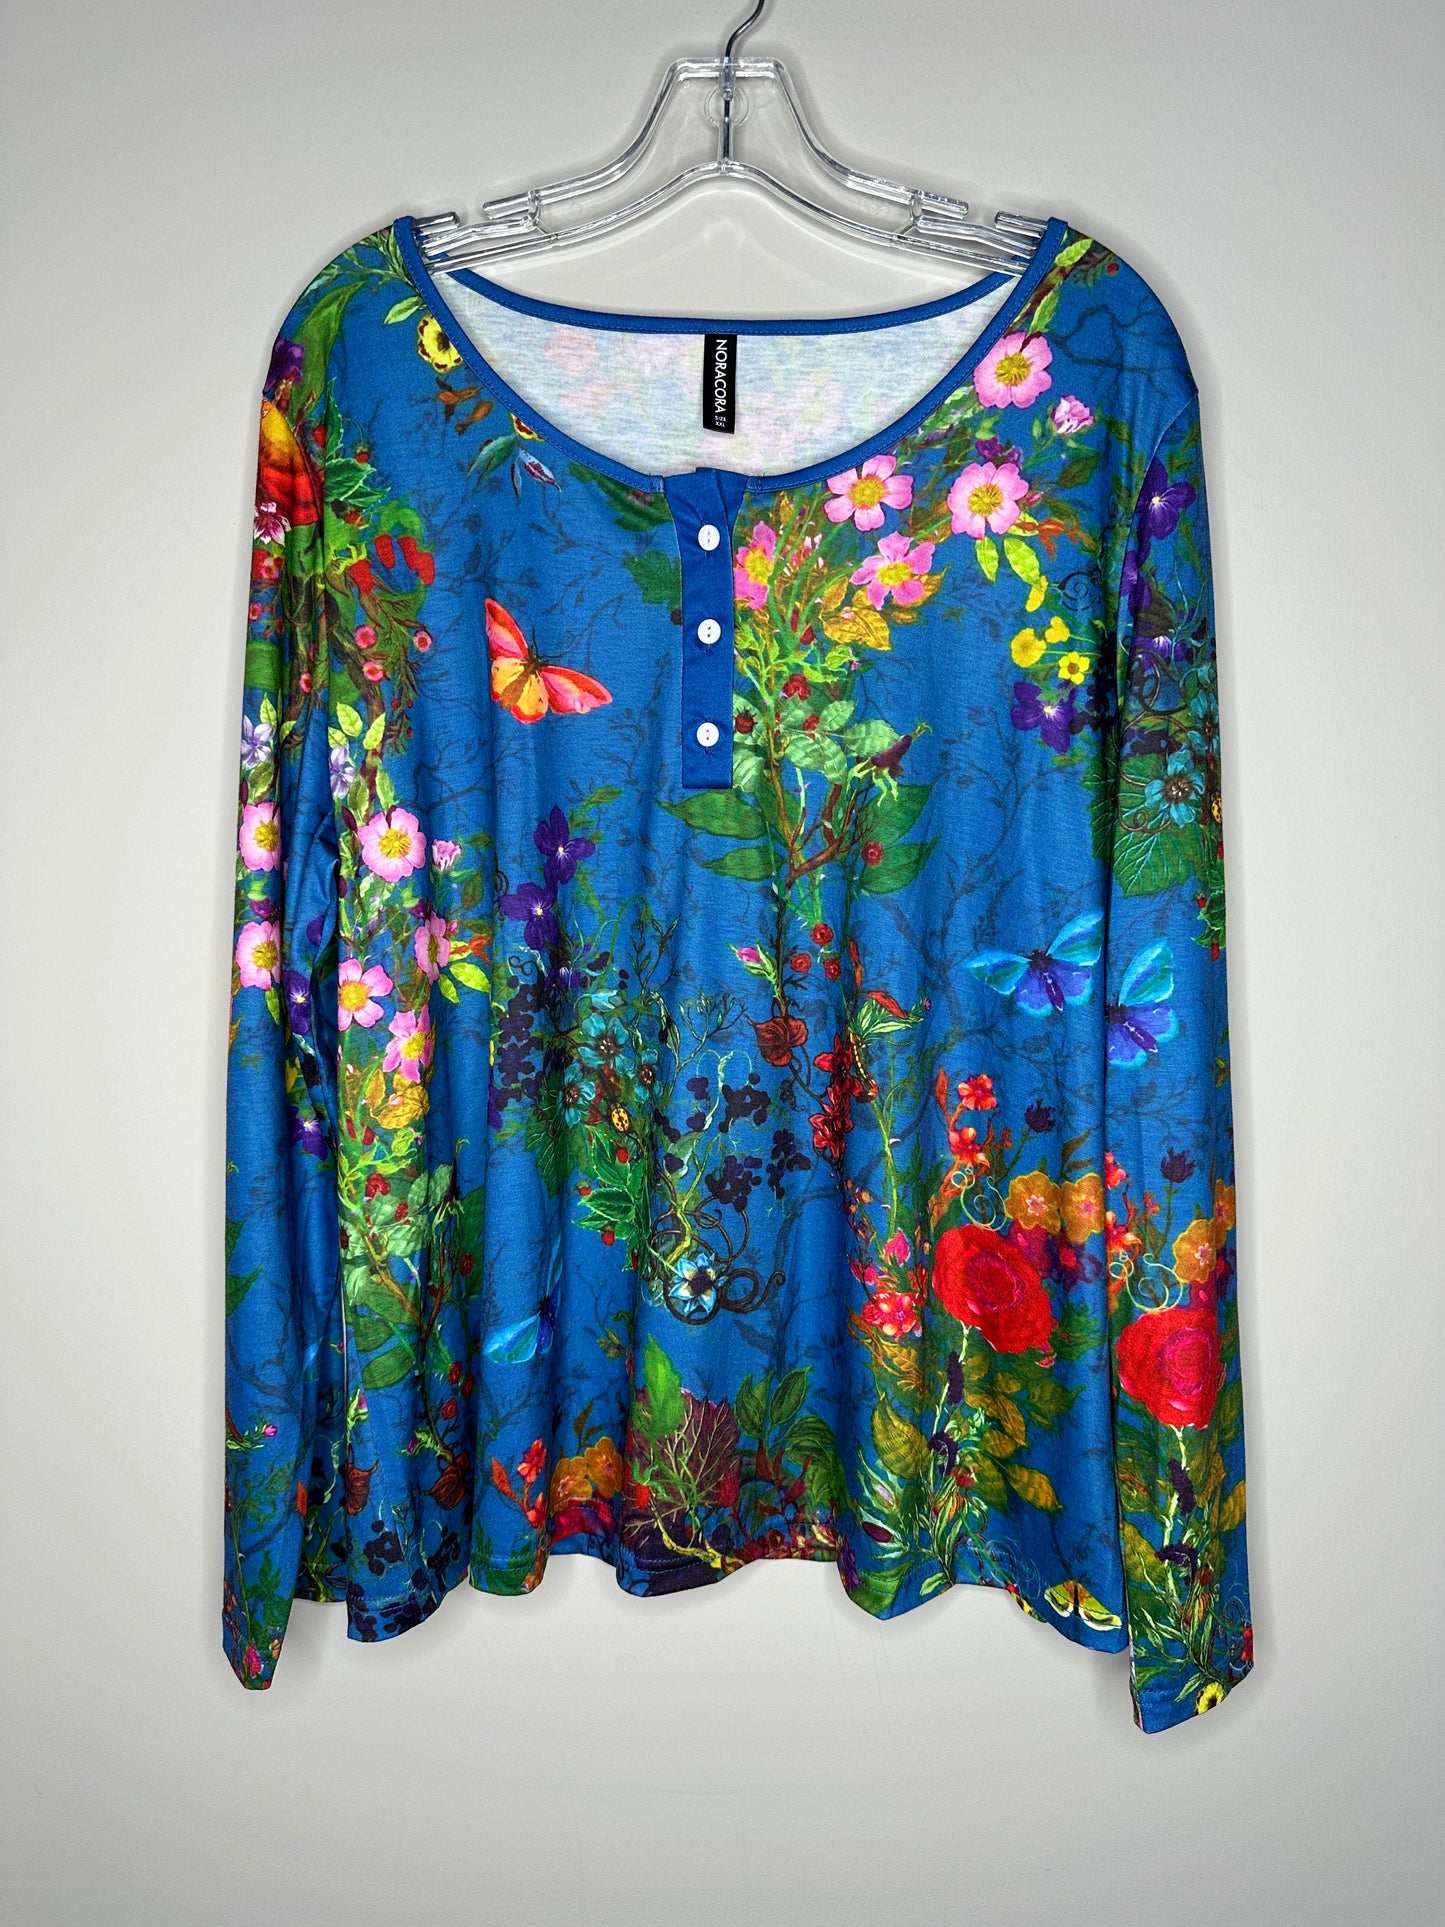 Noracora Size XXL (16) Blue w/Flowers & Butterflies Long Sleeve Top, new/NWOT